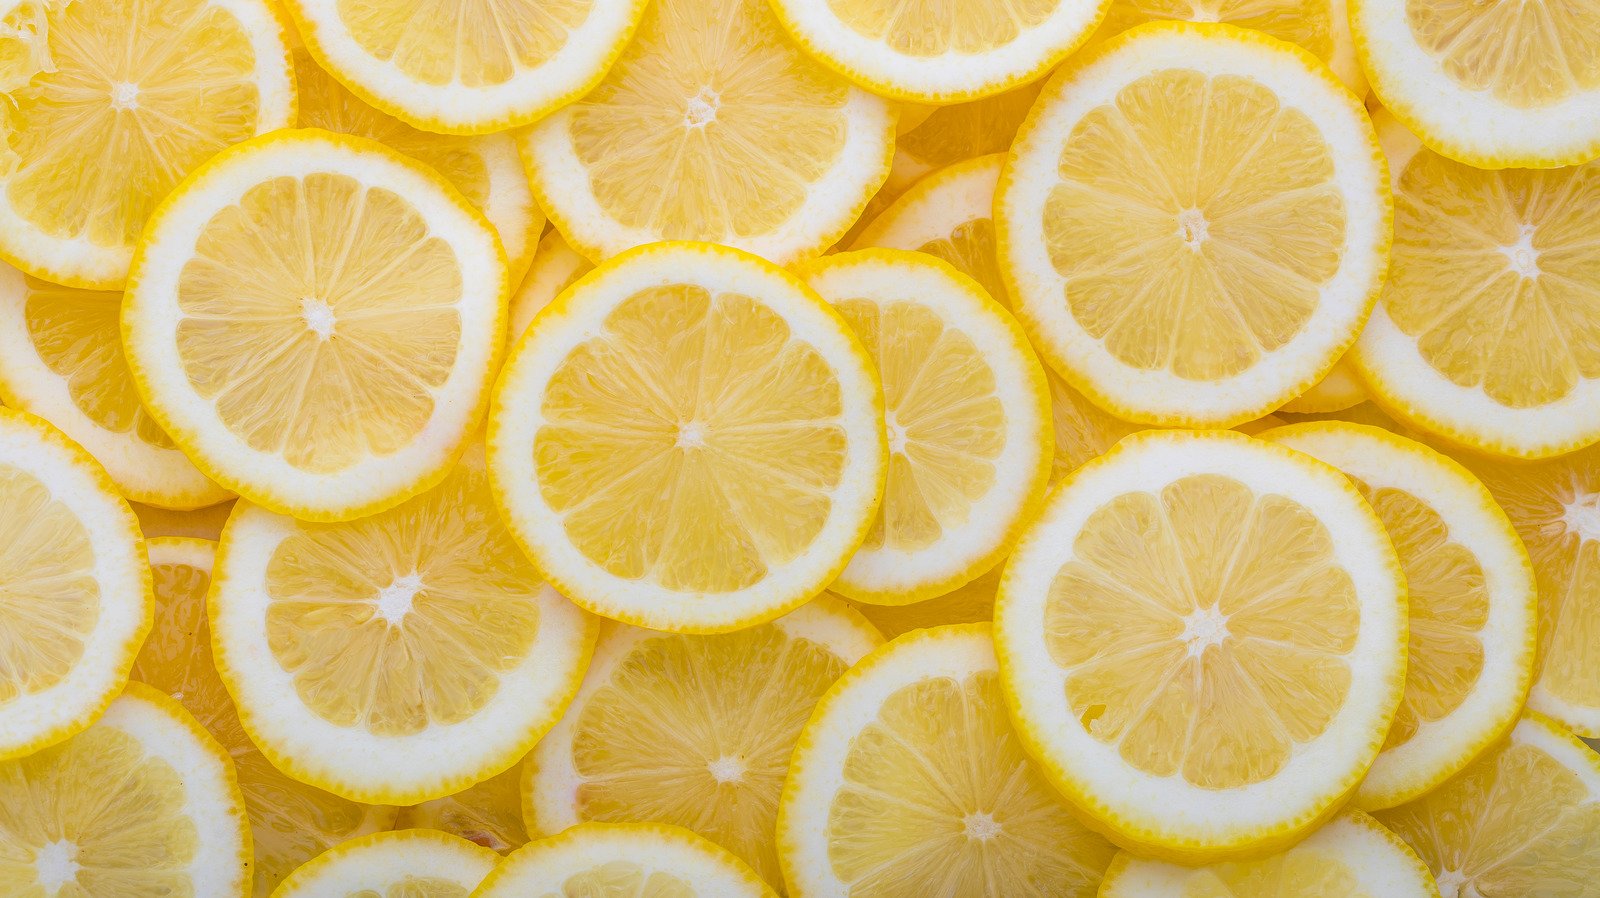 The Real Health Benefits Of Lemons